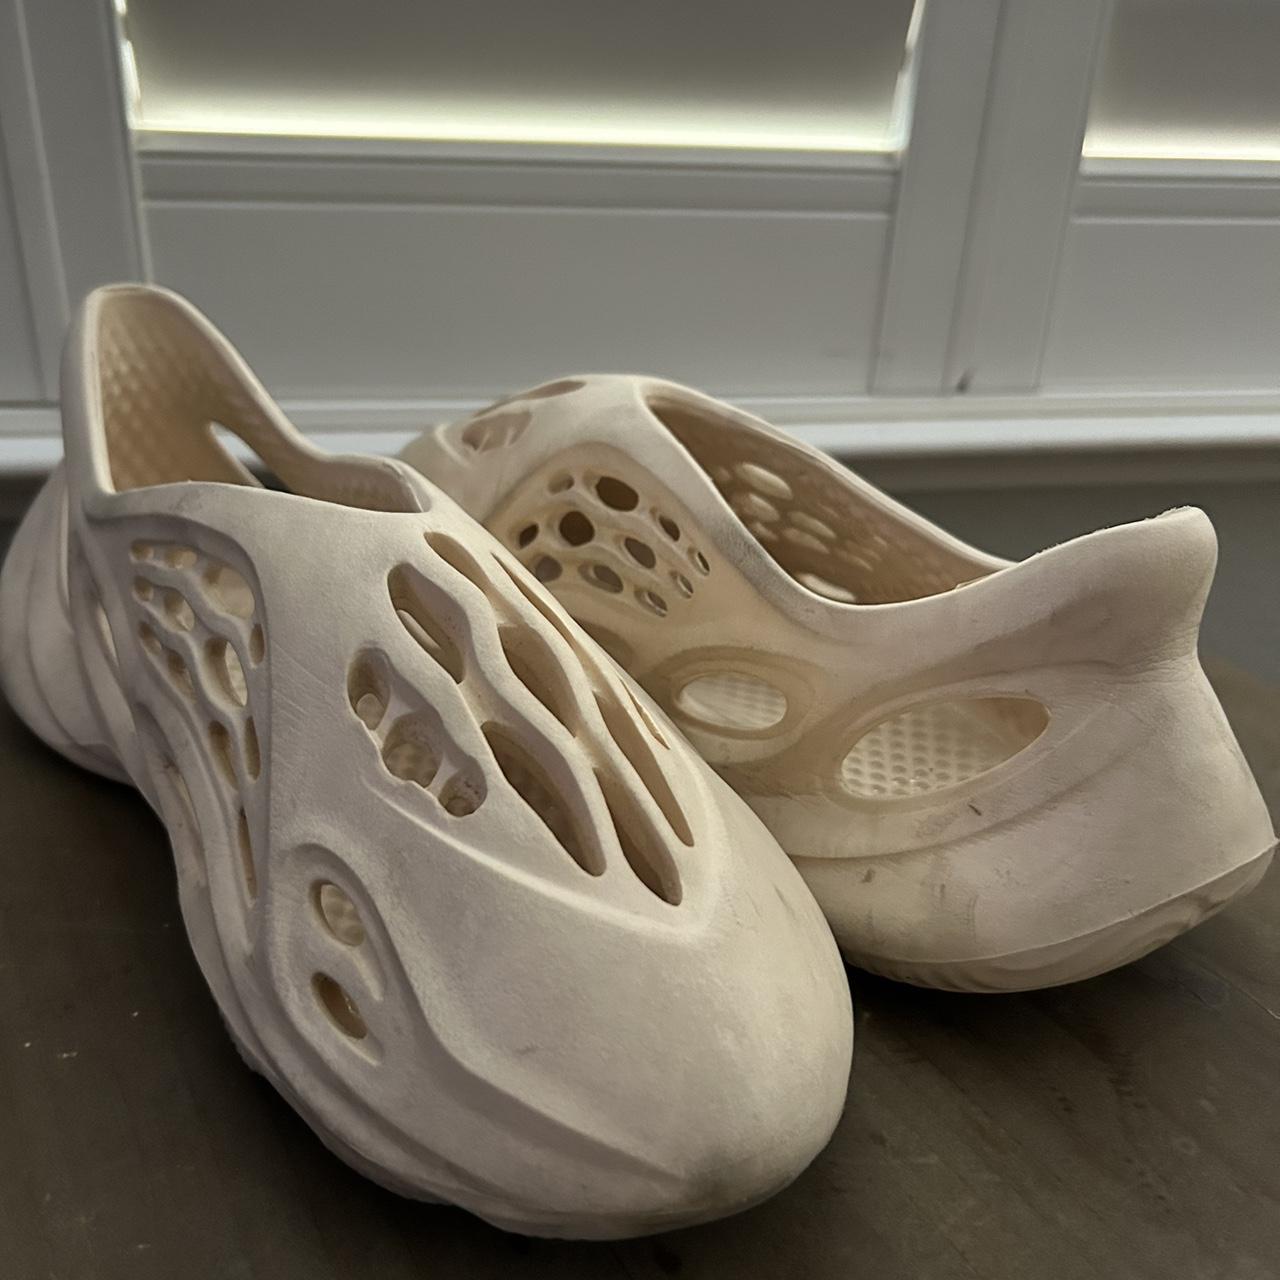 PRICE NEGOTIABLE foam runner type shoe size 11.5 - Depop